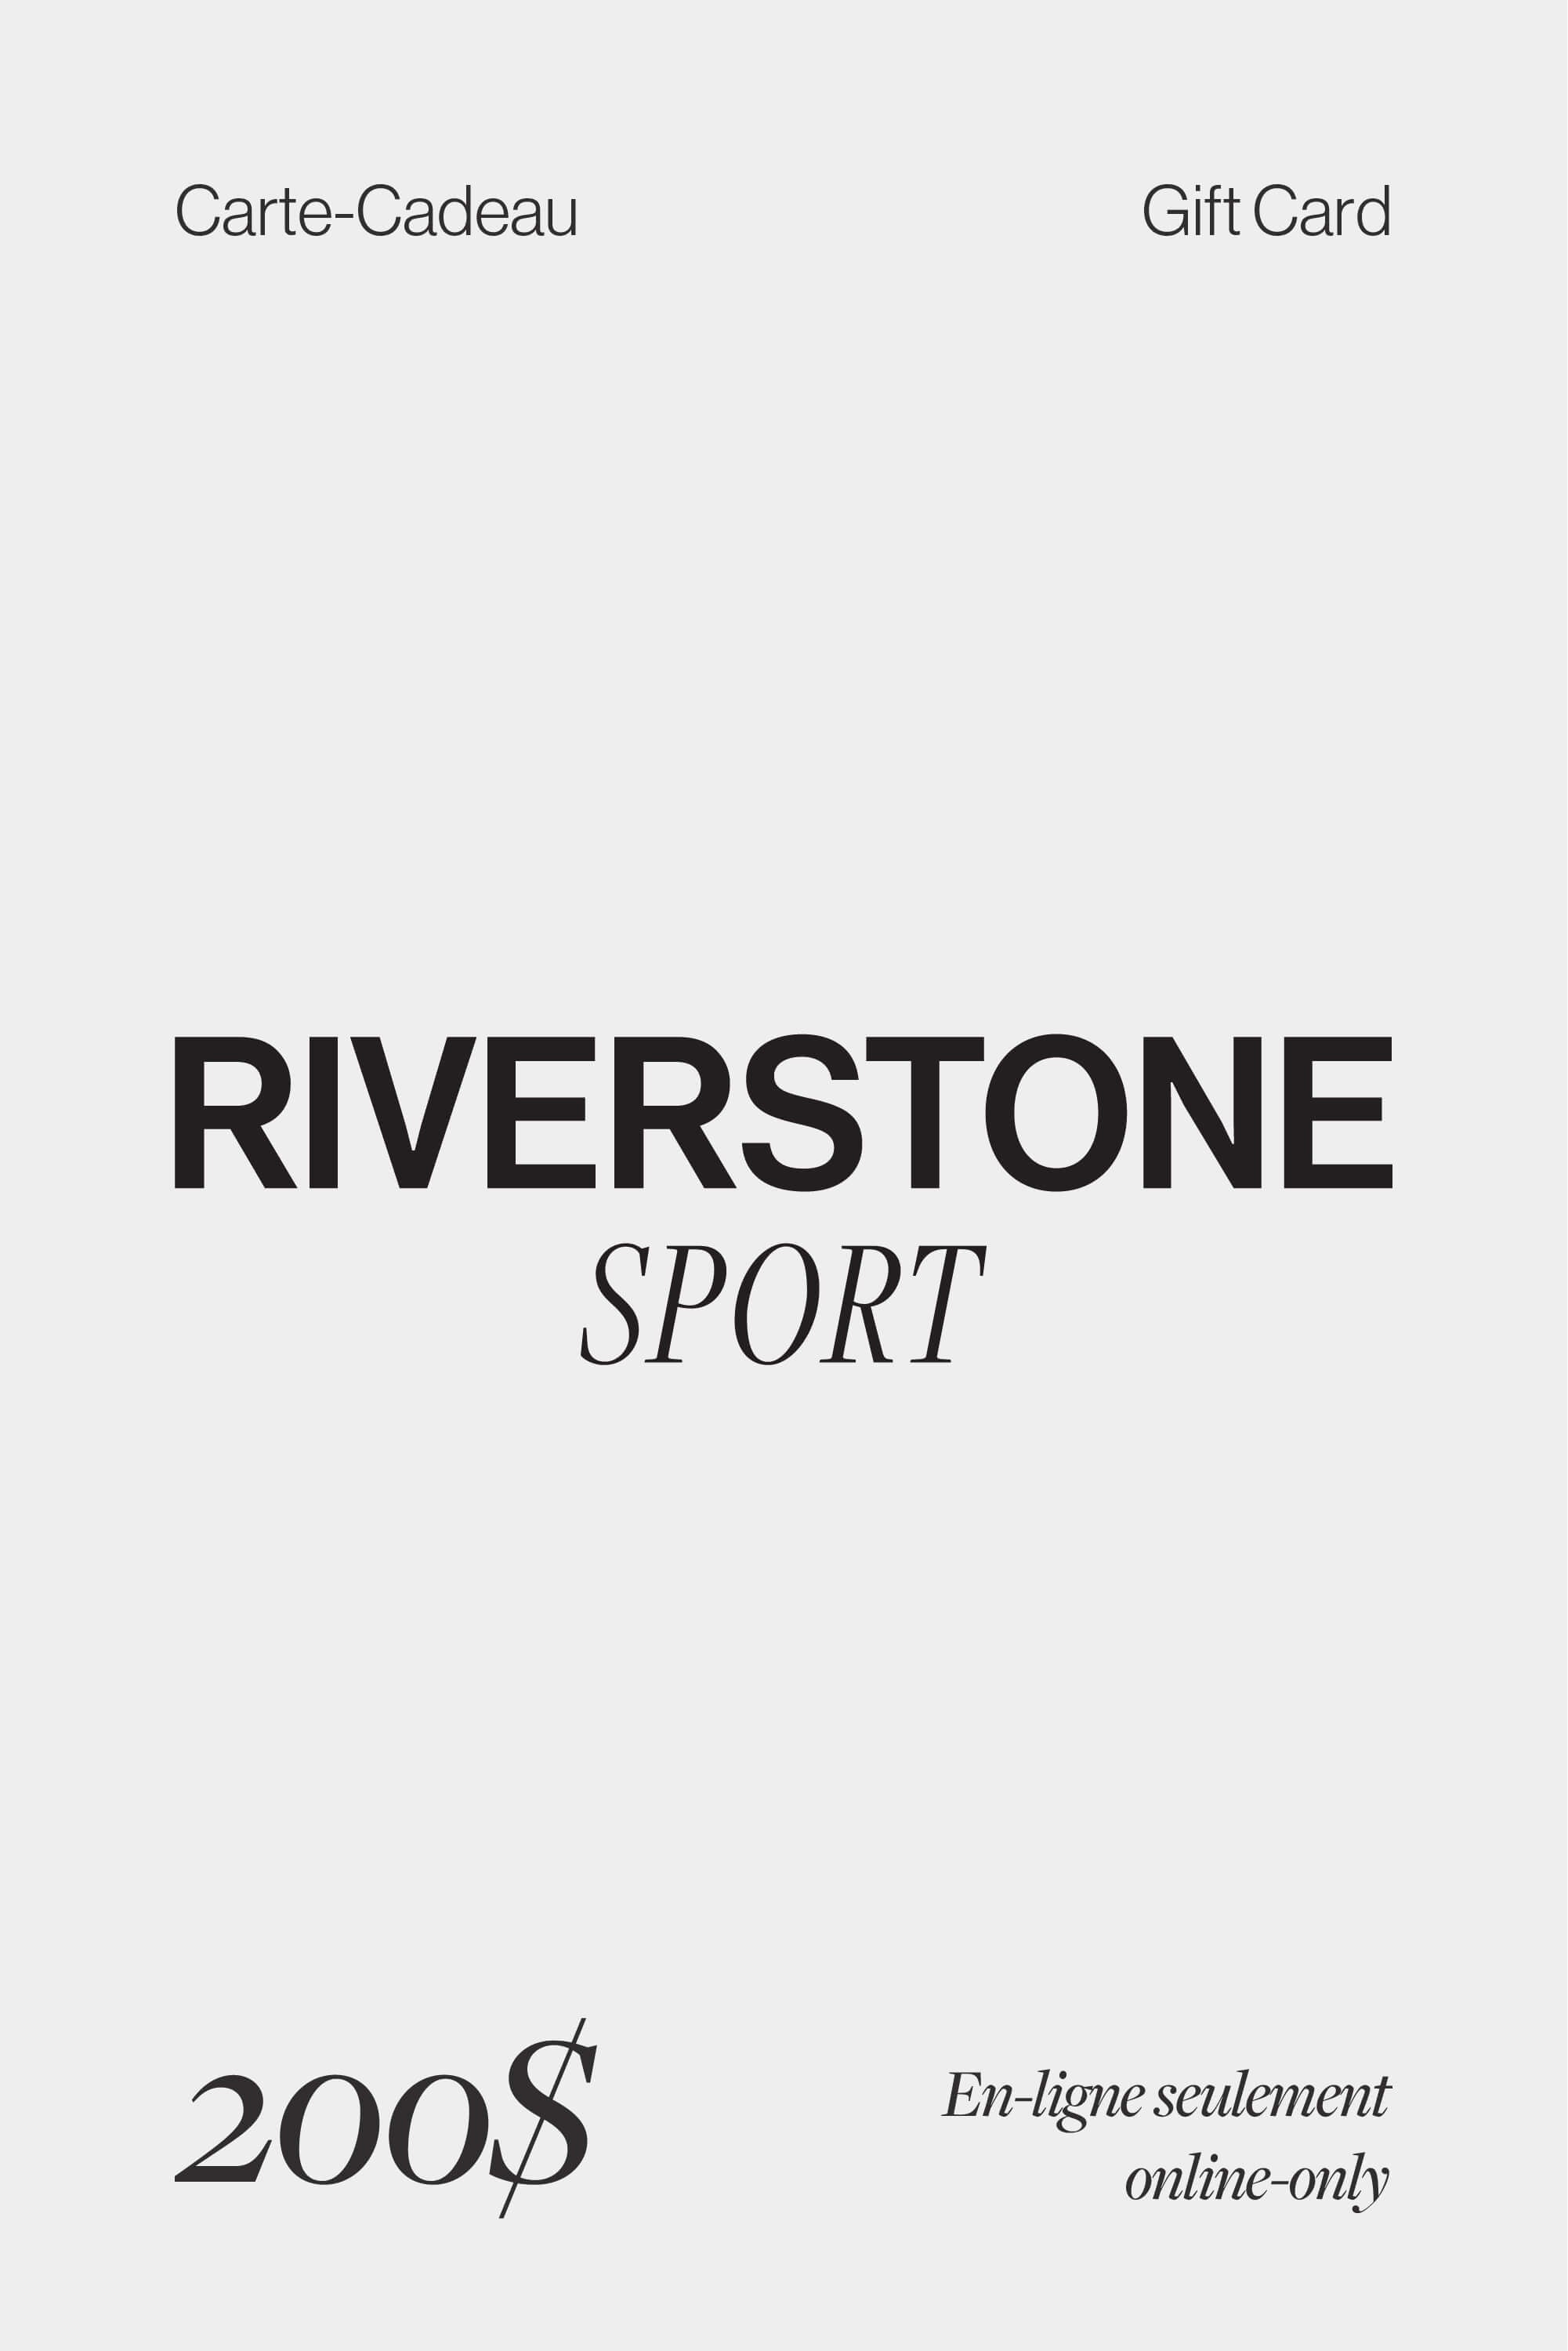 Online Riverstone Sport Gift Card